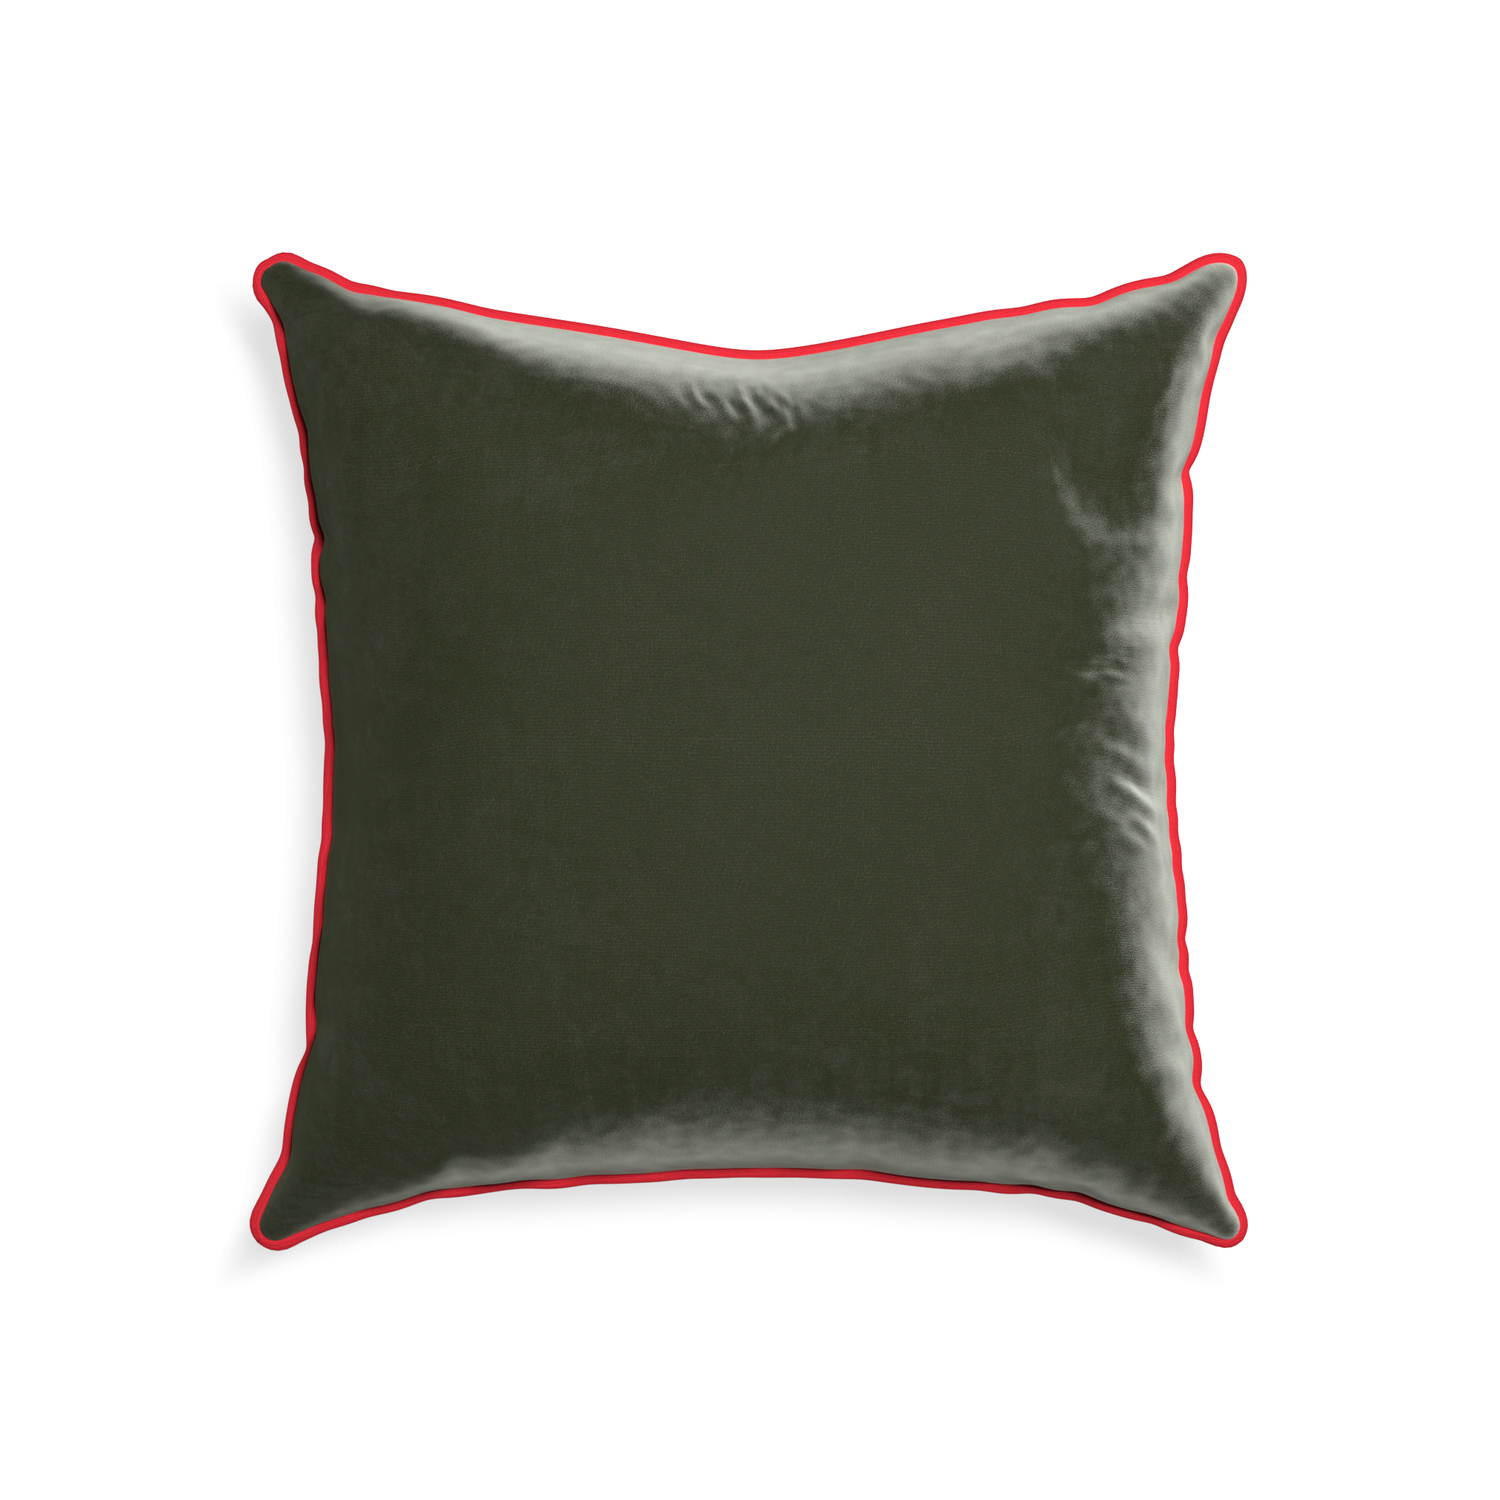 22-square fern velvet custom pillow with cherry piping on white background